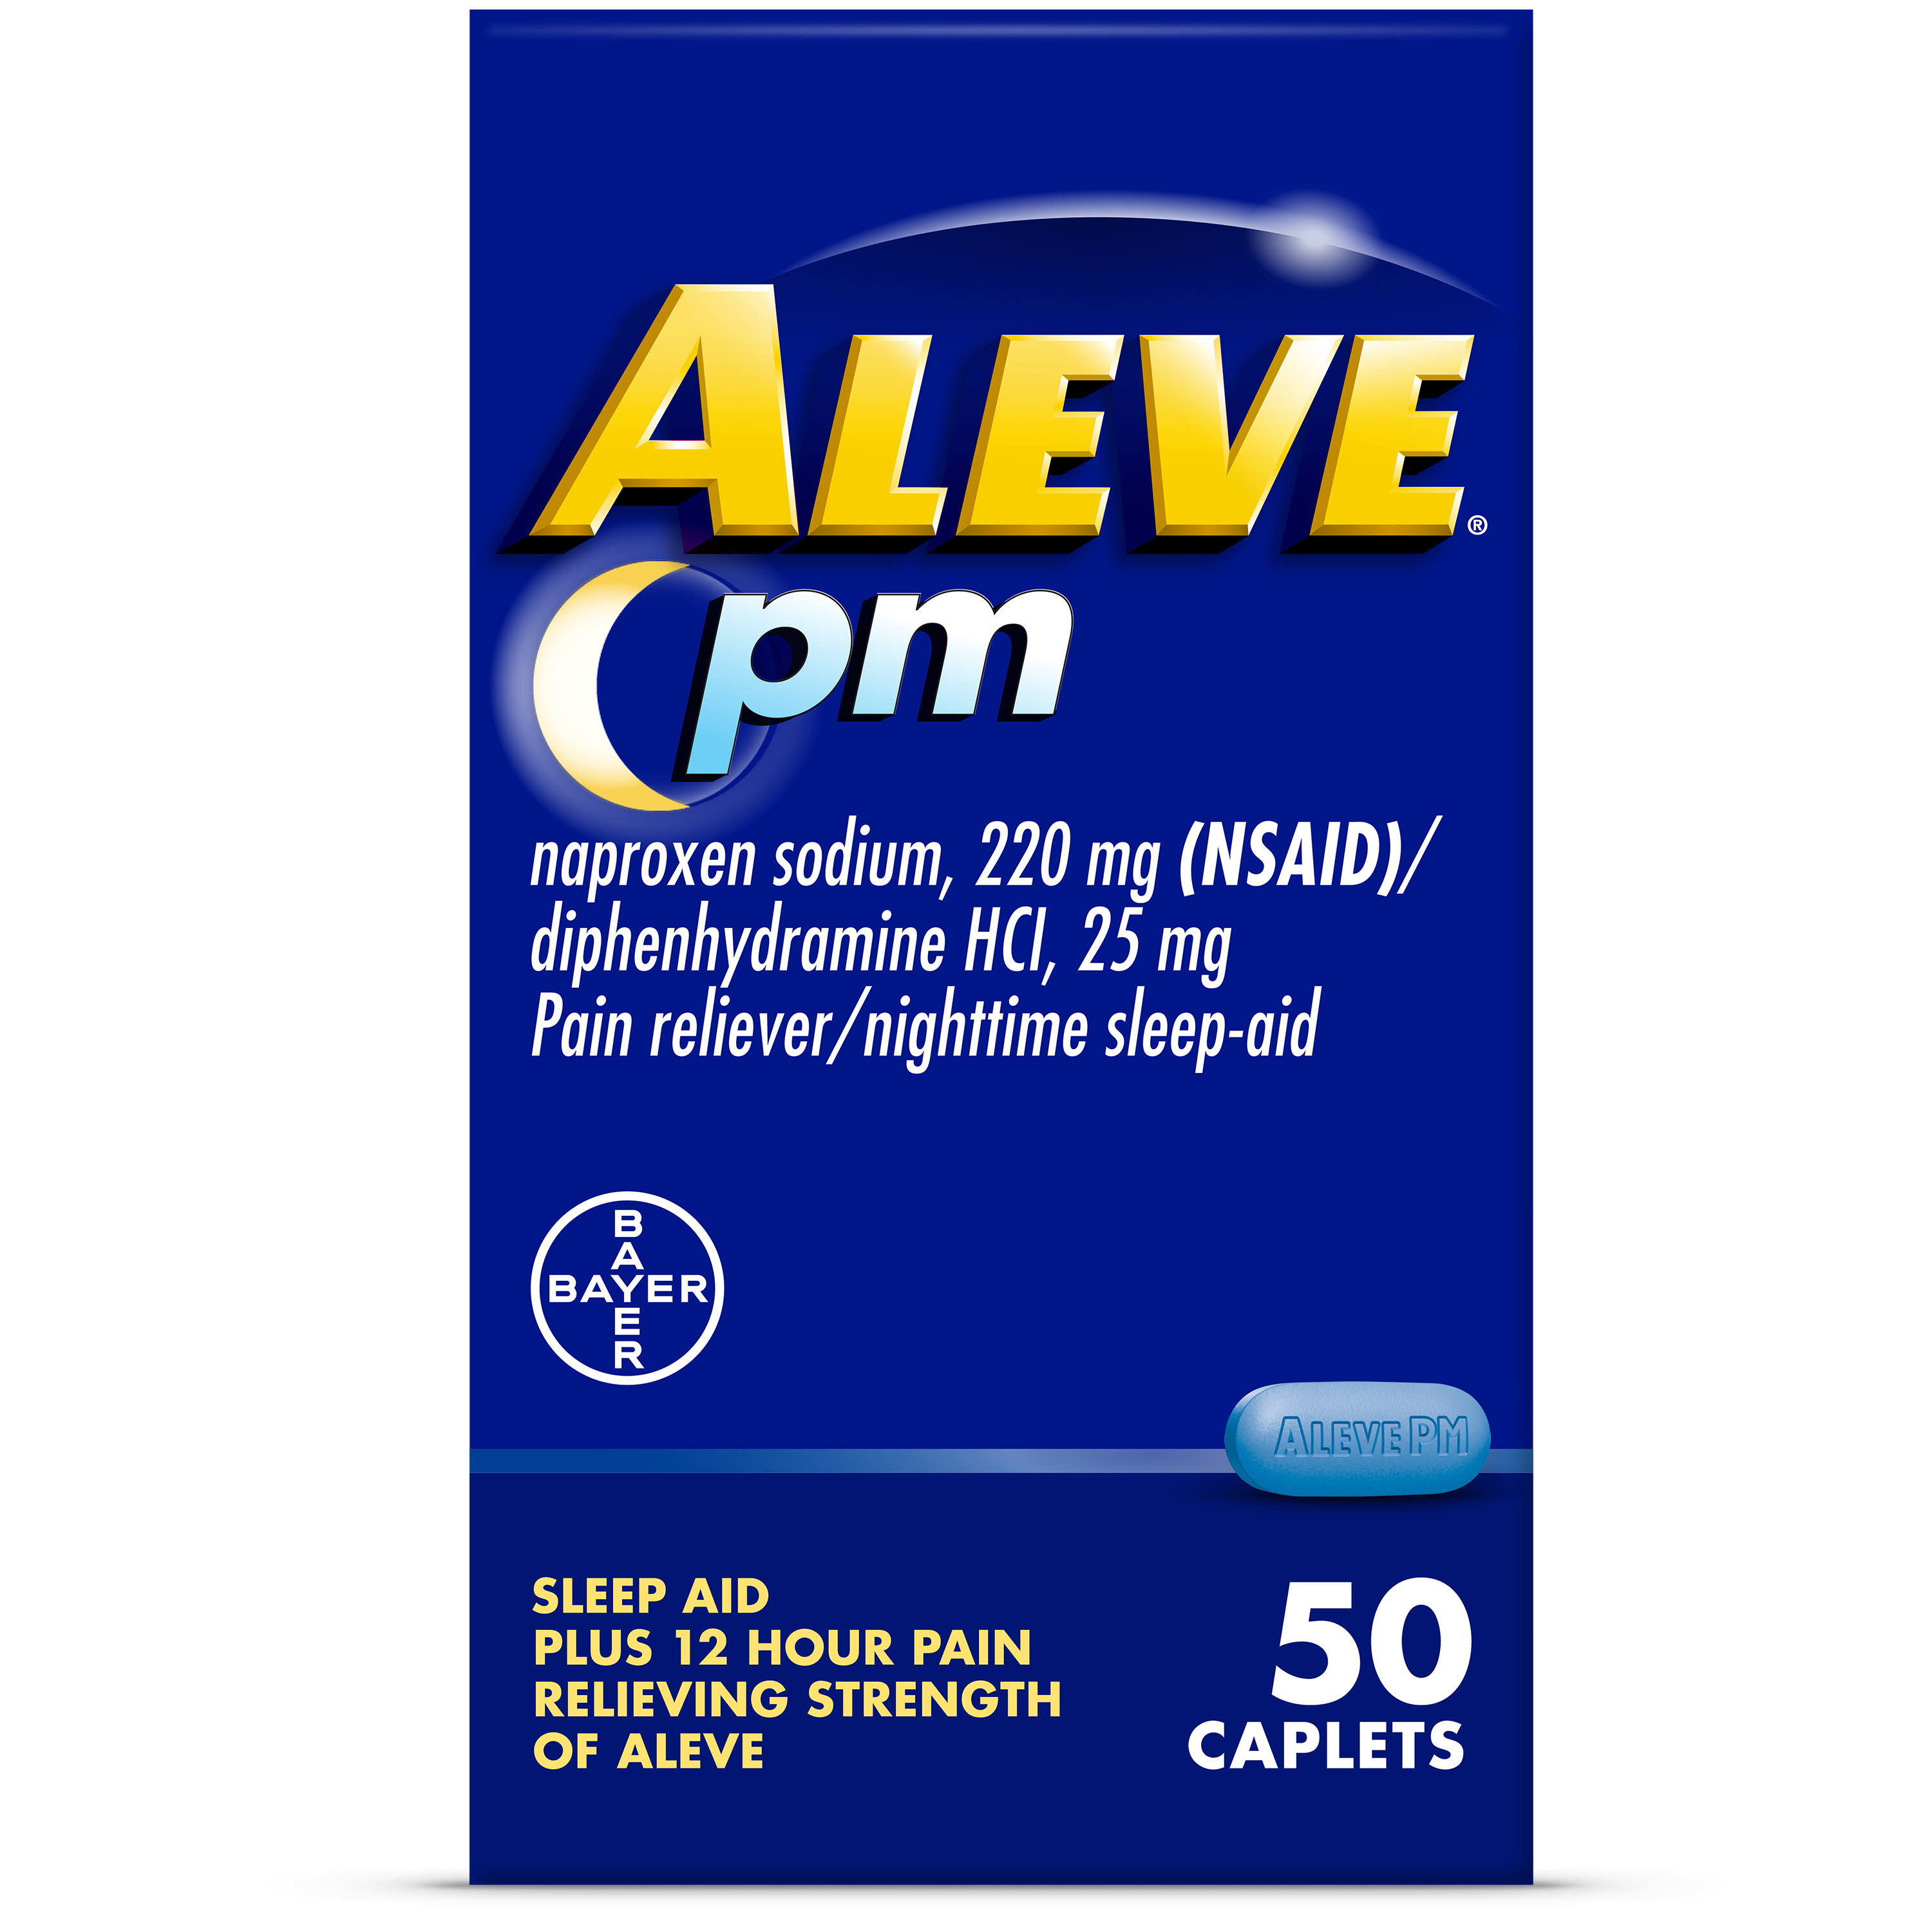 Aleve Pain Reliever/Nighttime Sleep-Aid, PM, Caplets - 50 caplets